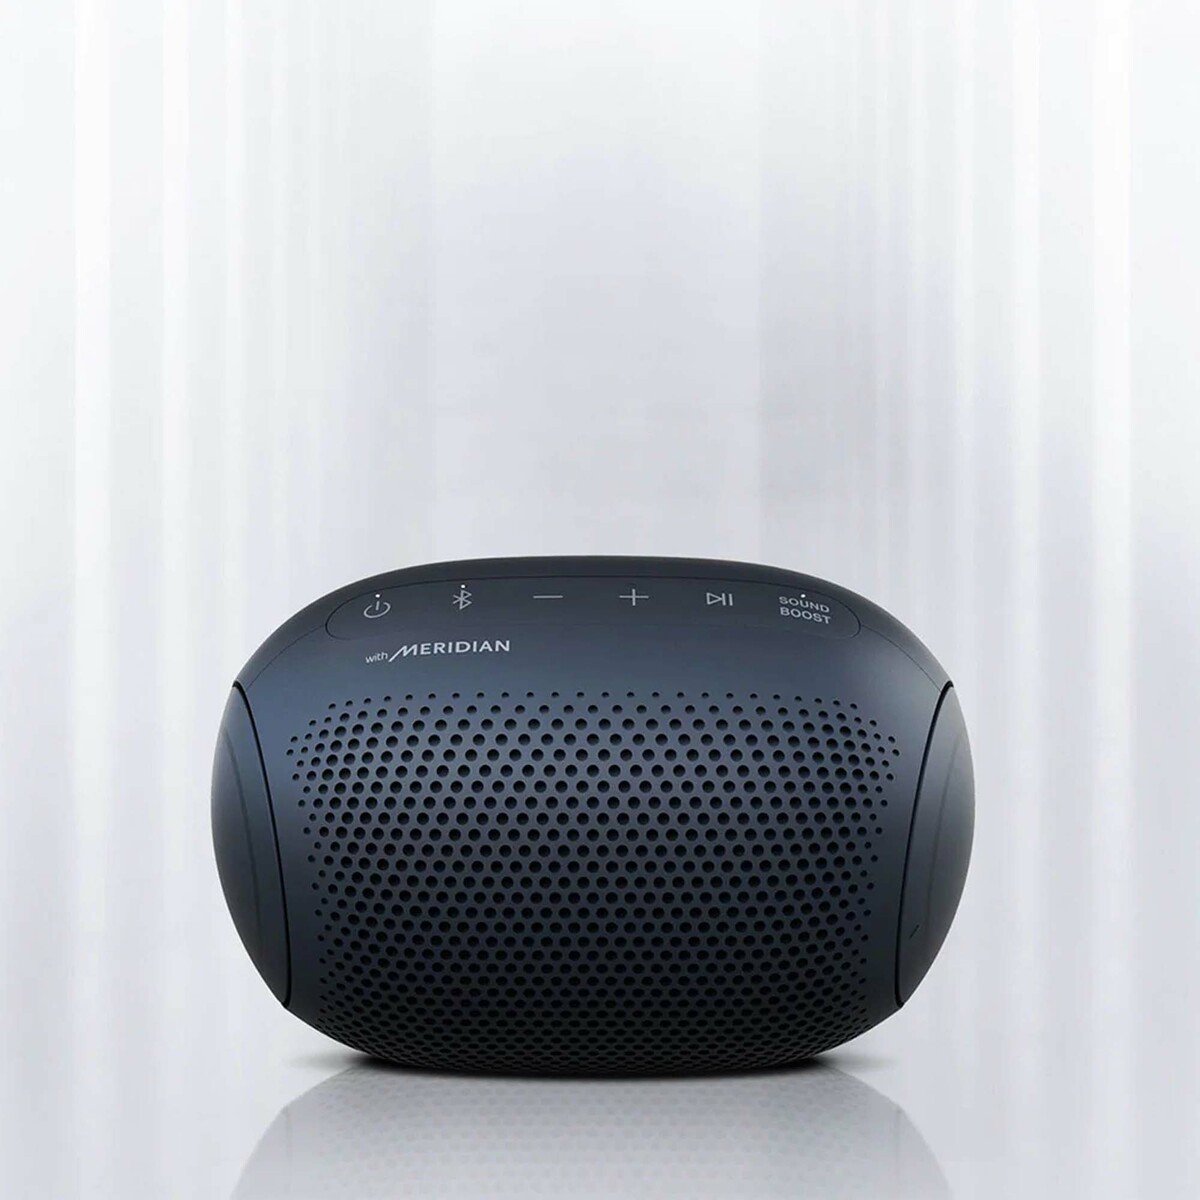 LG Portable Bluetooth Speaker PL2